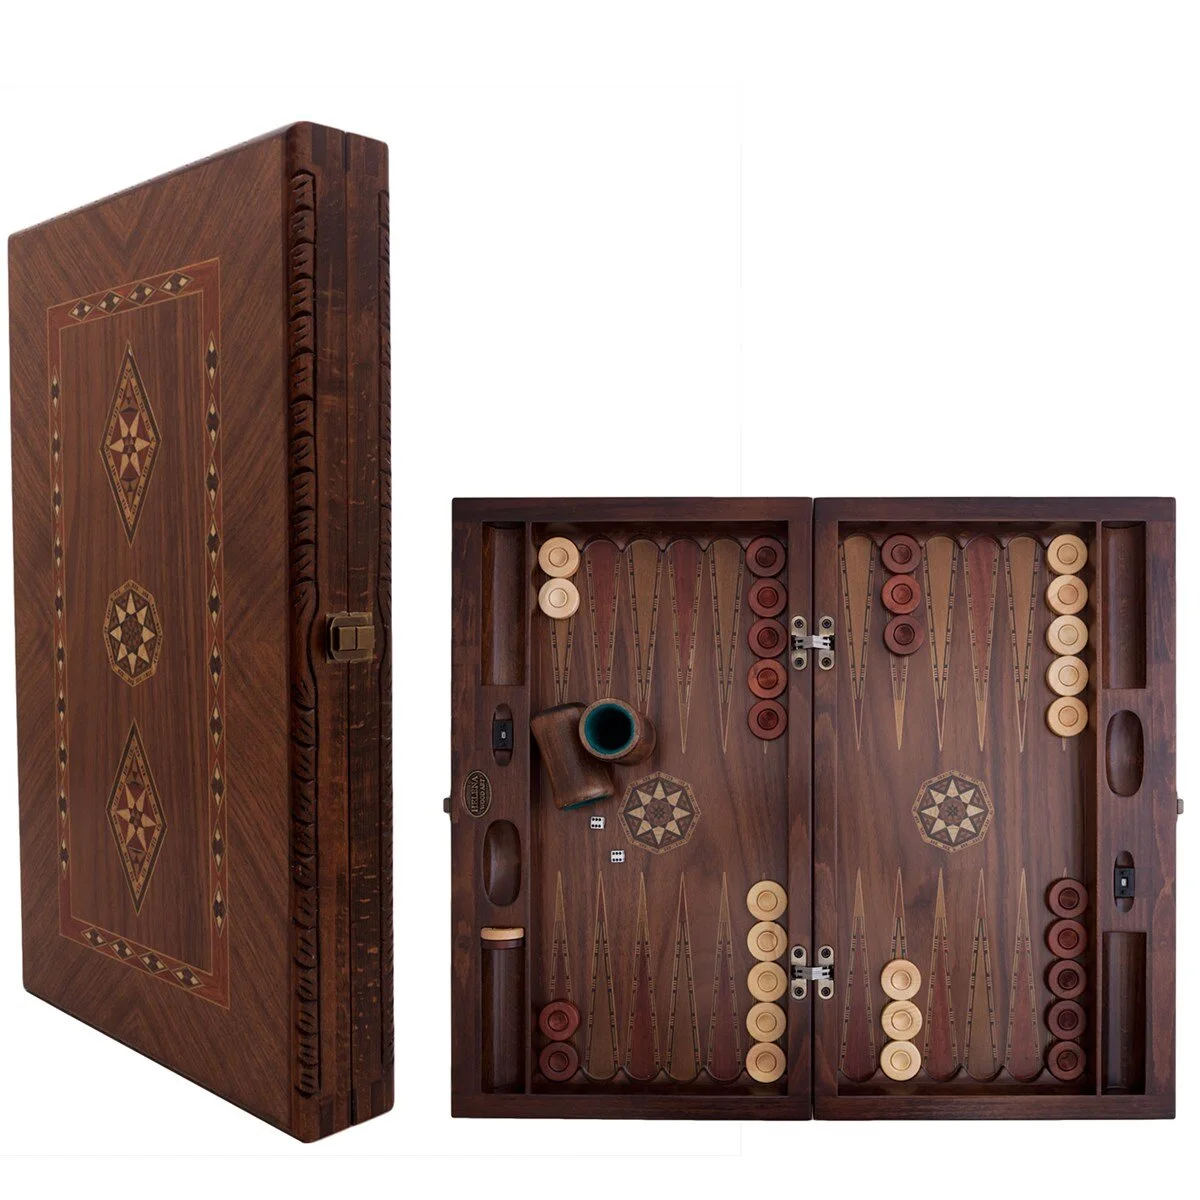 Helena Wood Art Backgammon - Tavla - Handgemaakt - Hout - Luxe uitgave - 52 x 30 x 7 cm